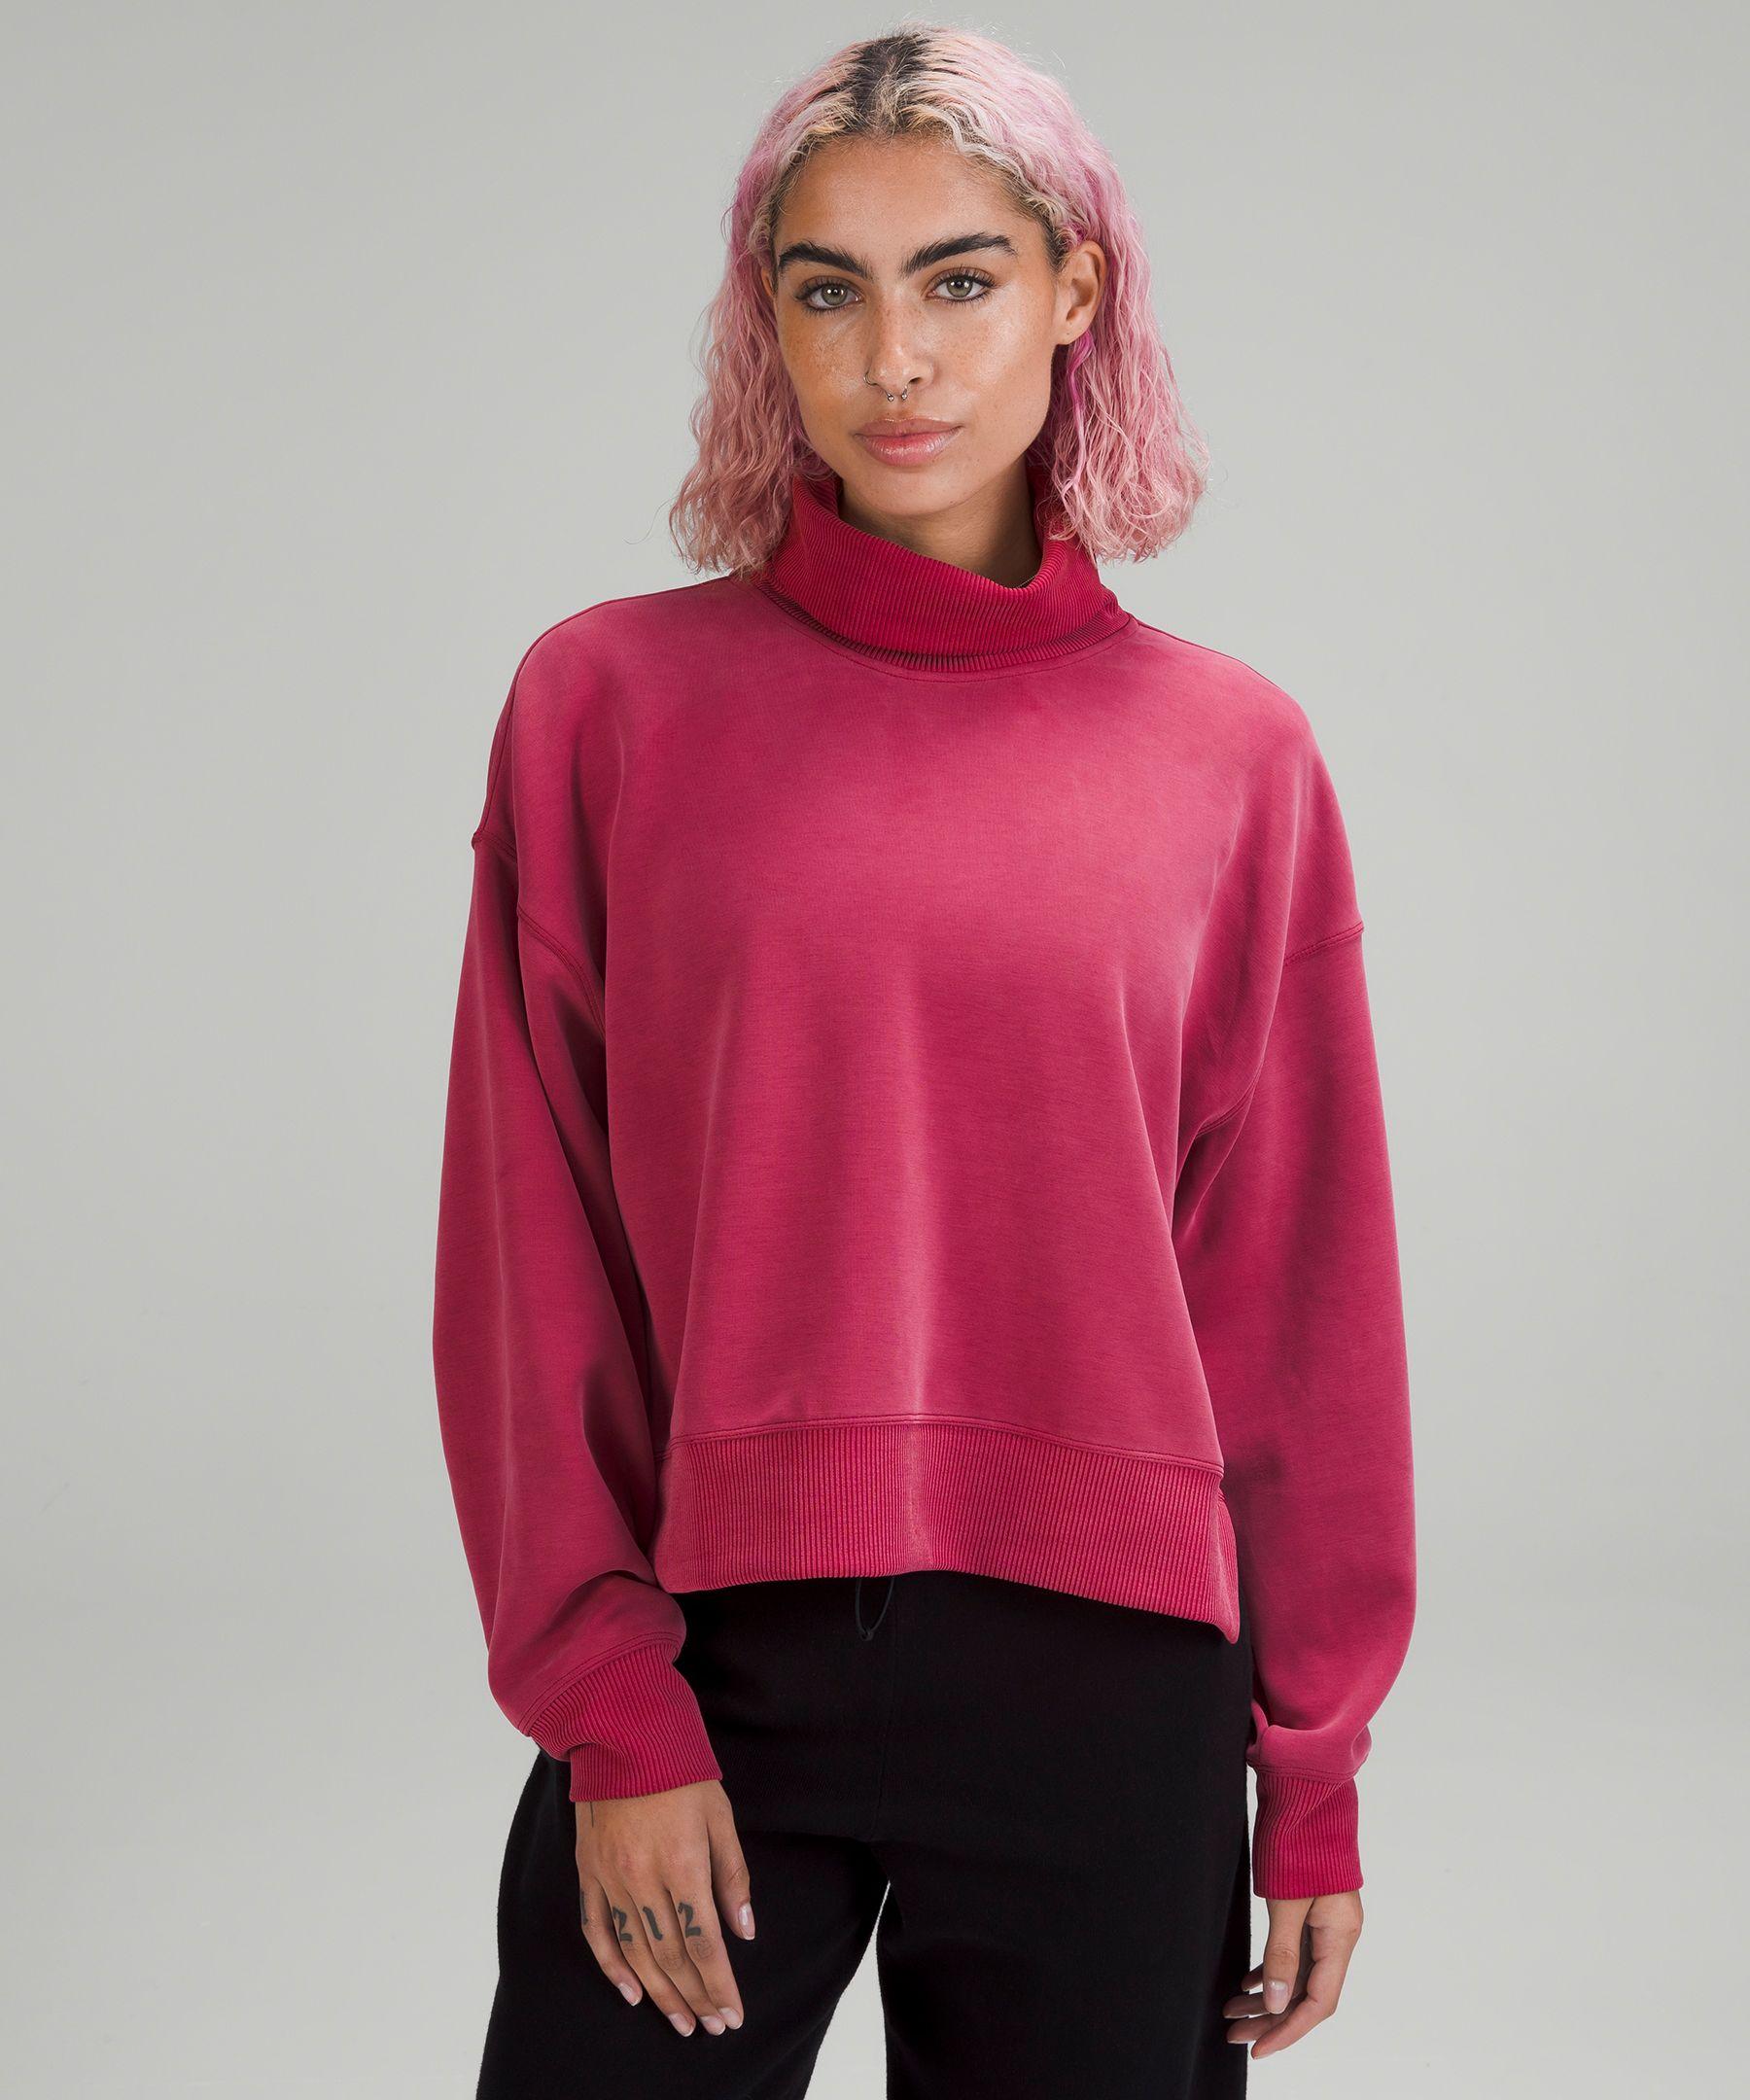 https://cdna.lystit.com/photos/lululemon/40c064a6/lululemon-athletica-designer-Pomegranate-Softstreme-Turtleneck-Pullover-Sweatshirt-Color-Pink-Size-10.jpeg